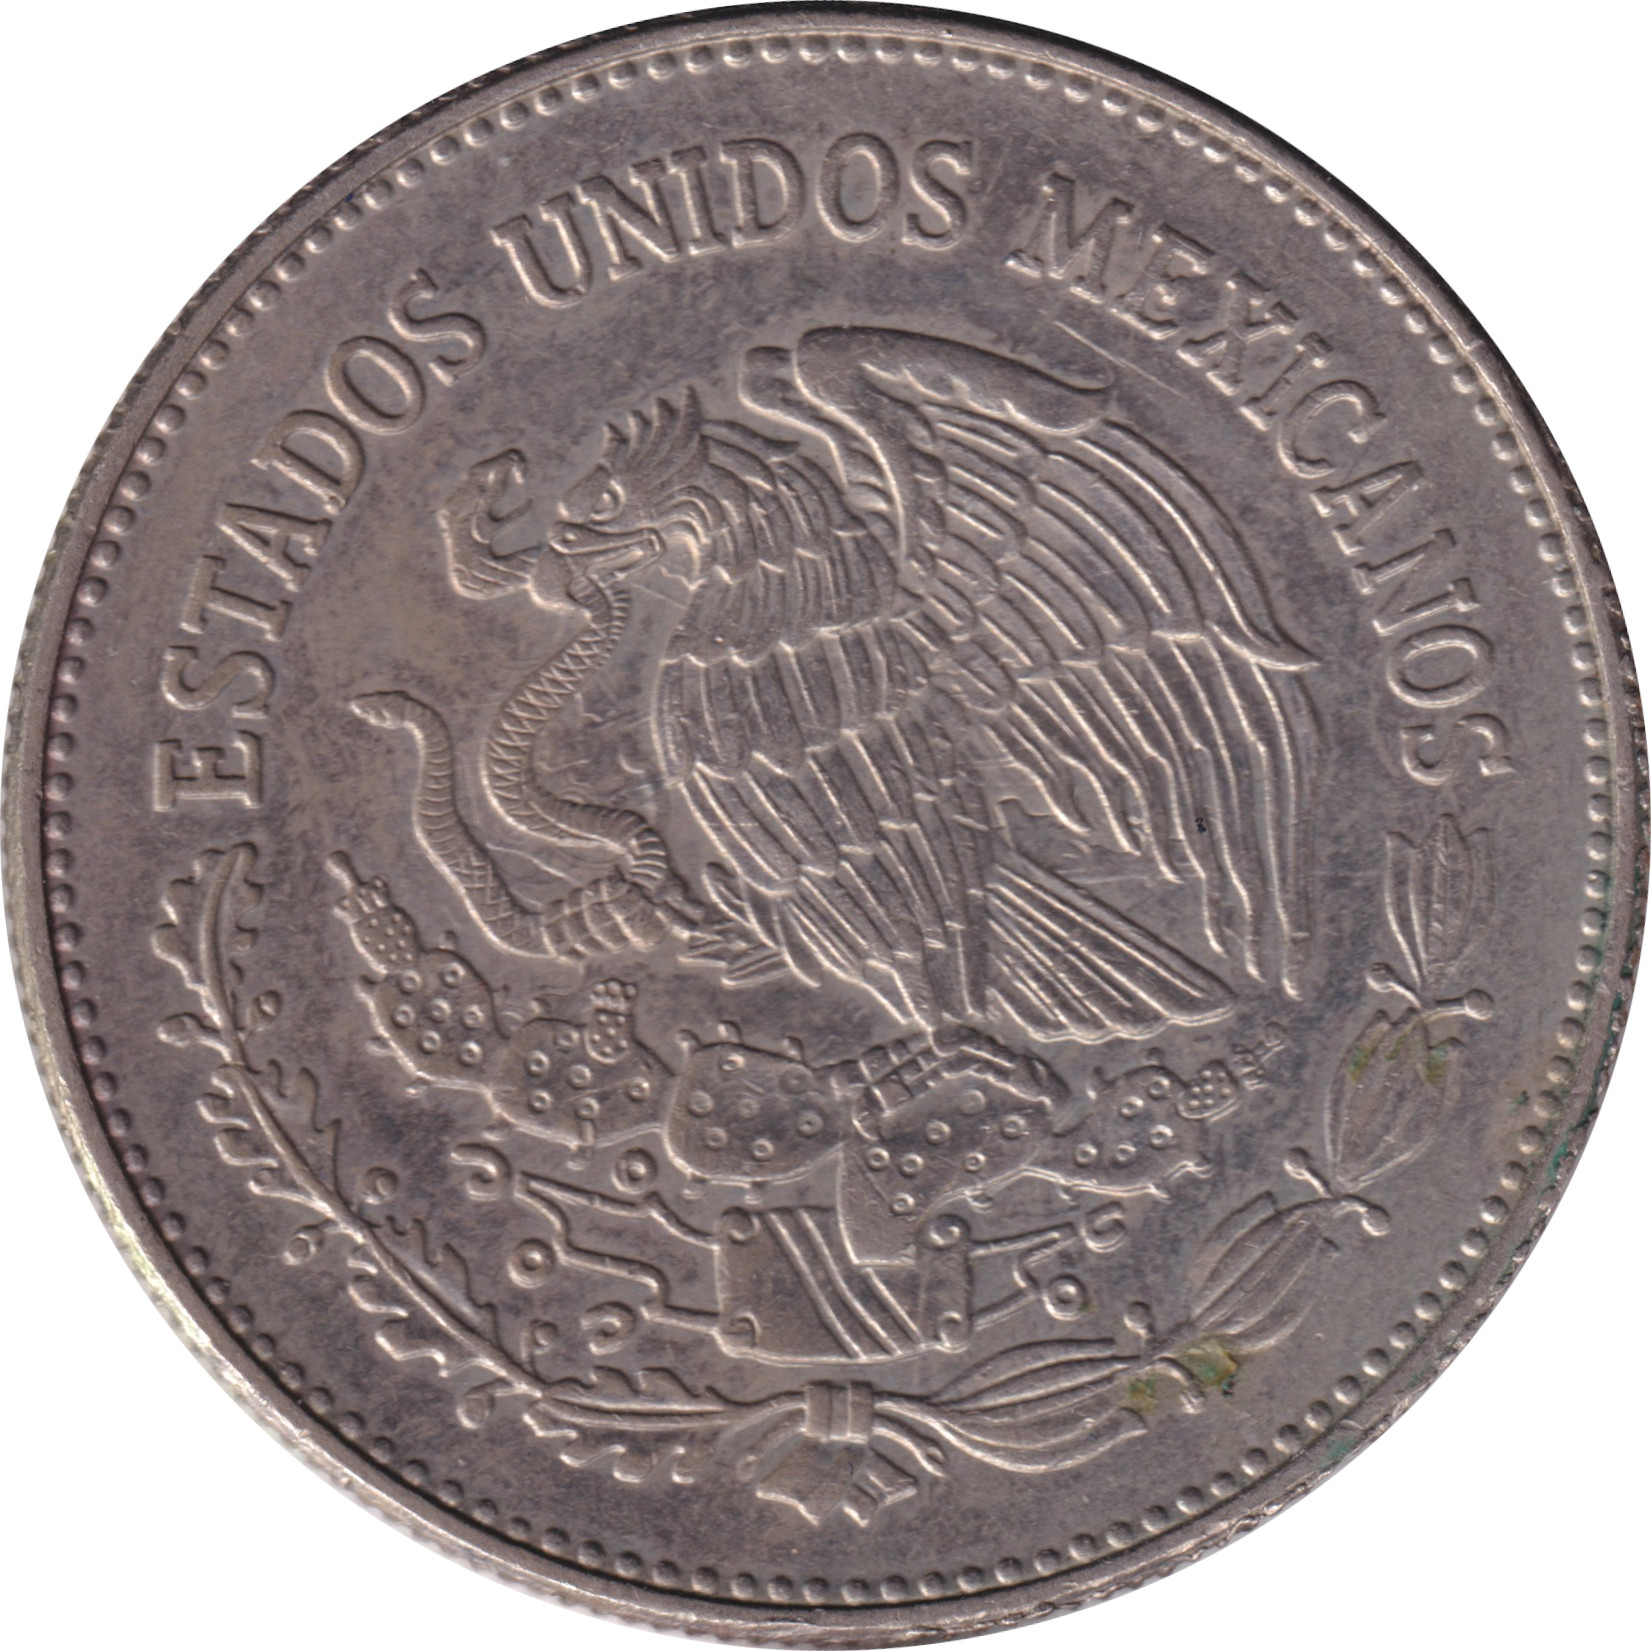 50 pesos - Culture Coyolxauhqui